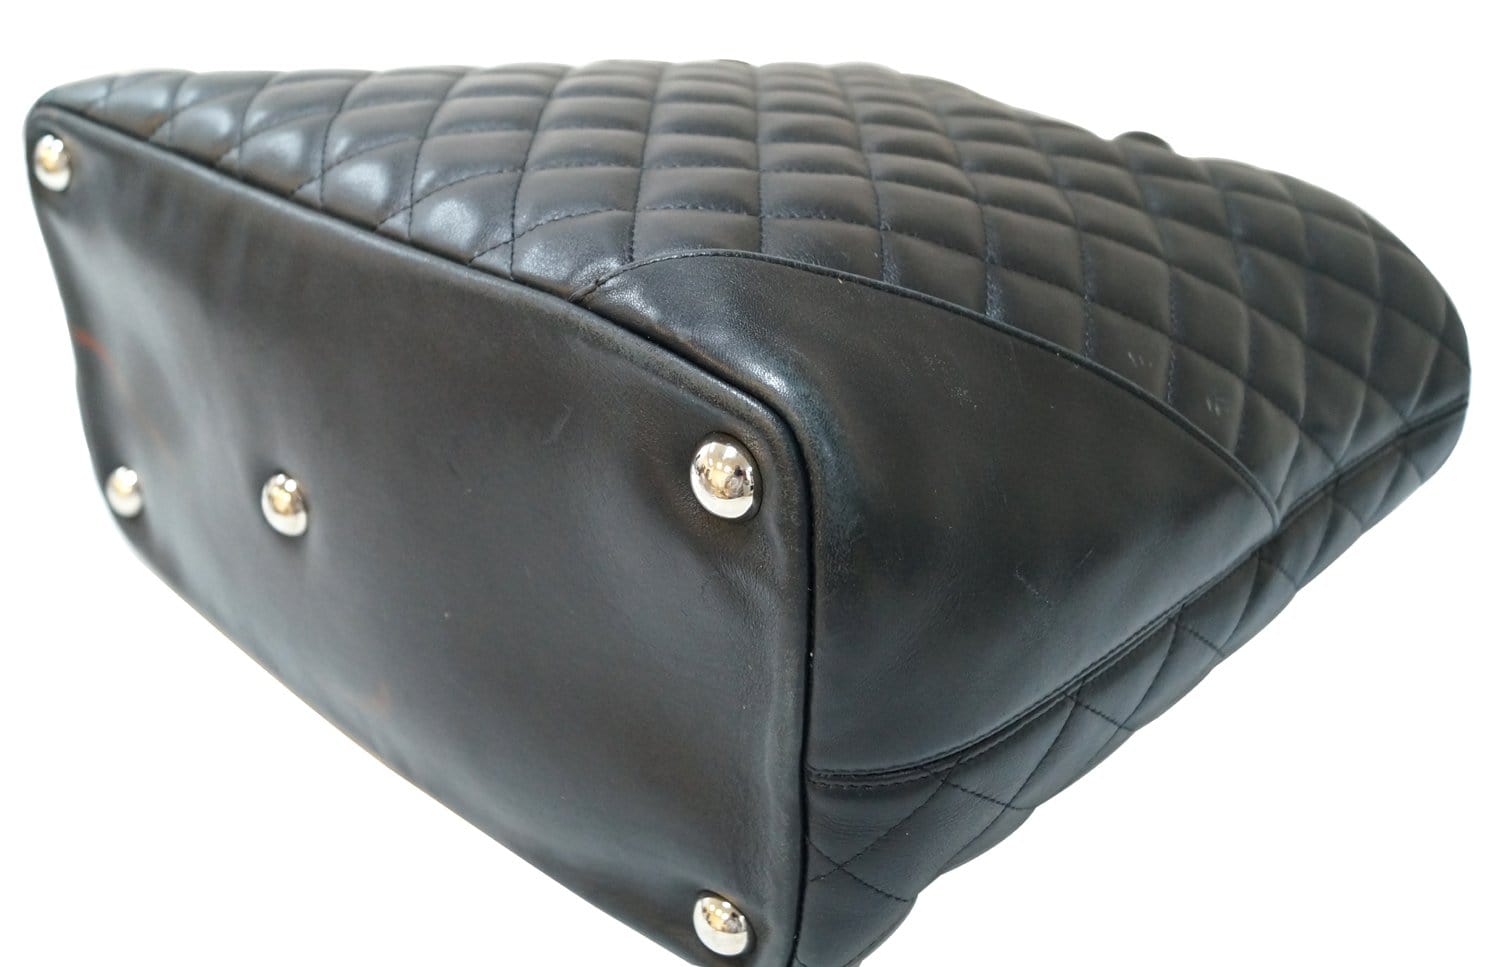 Chanel Black Lambskin Cambon CC Large Tote Bag